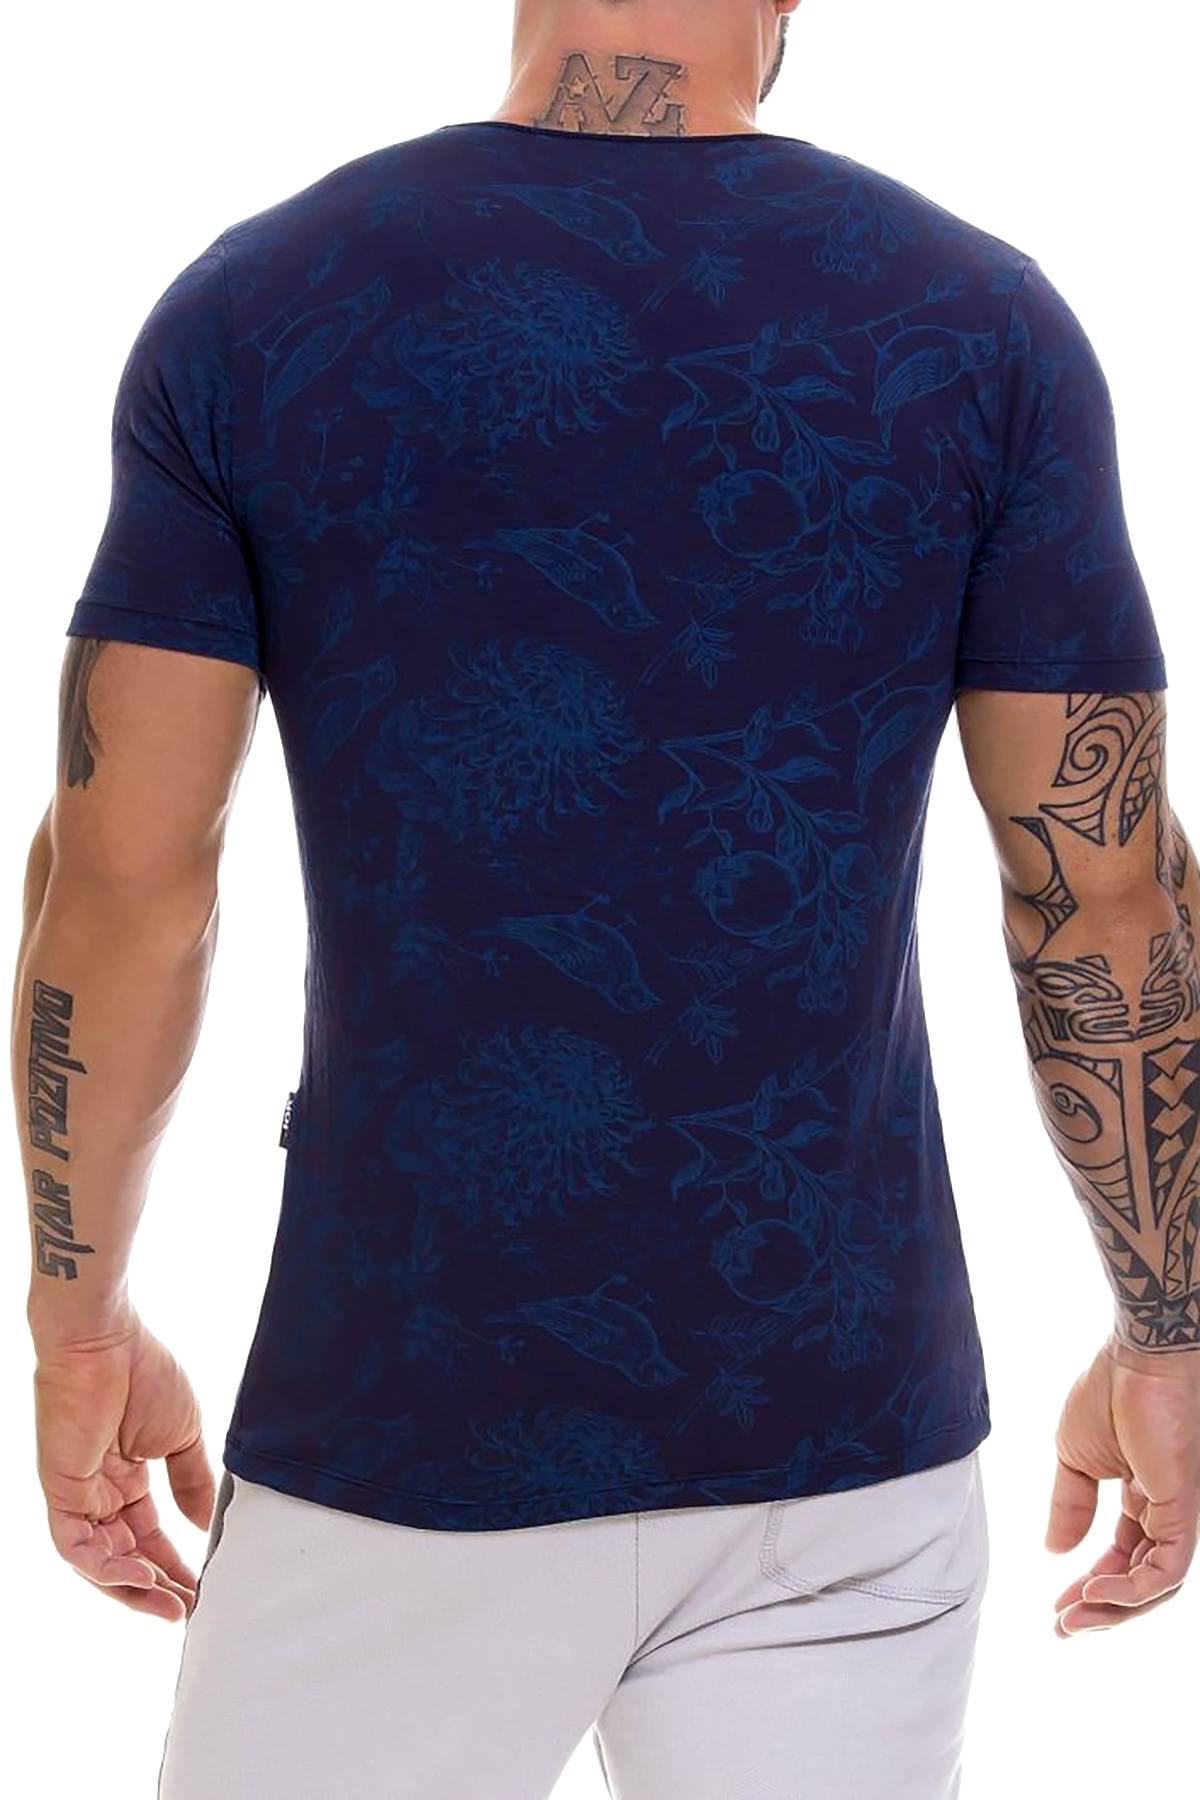 Jor Blue Manhattan V-Neck T-Shirt